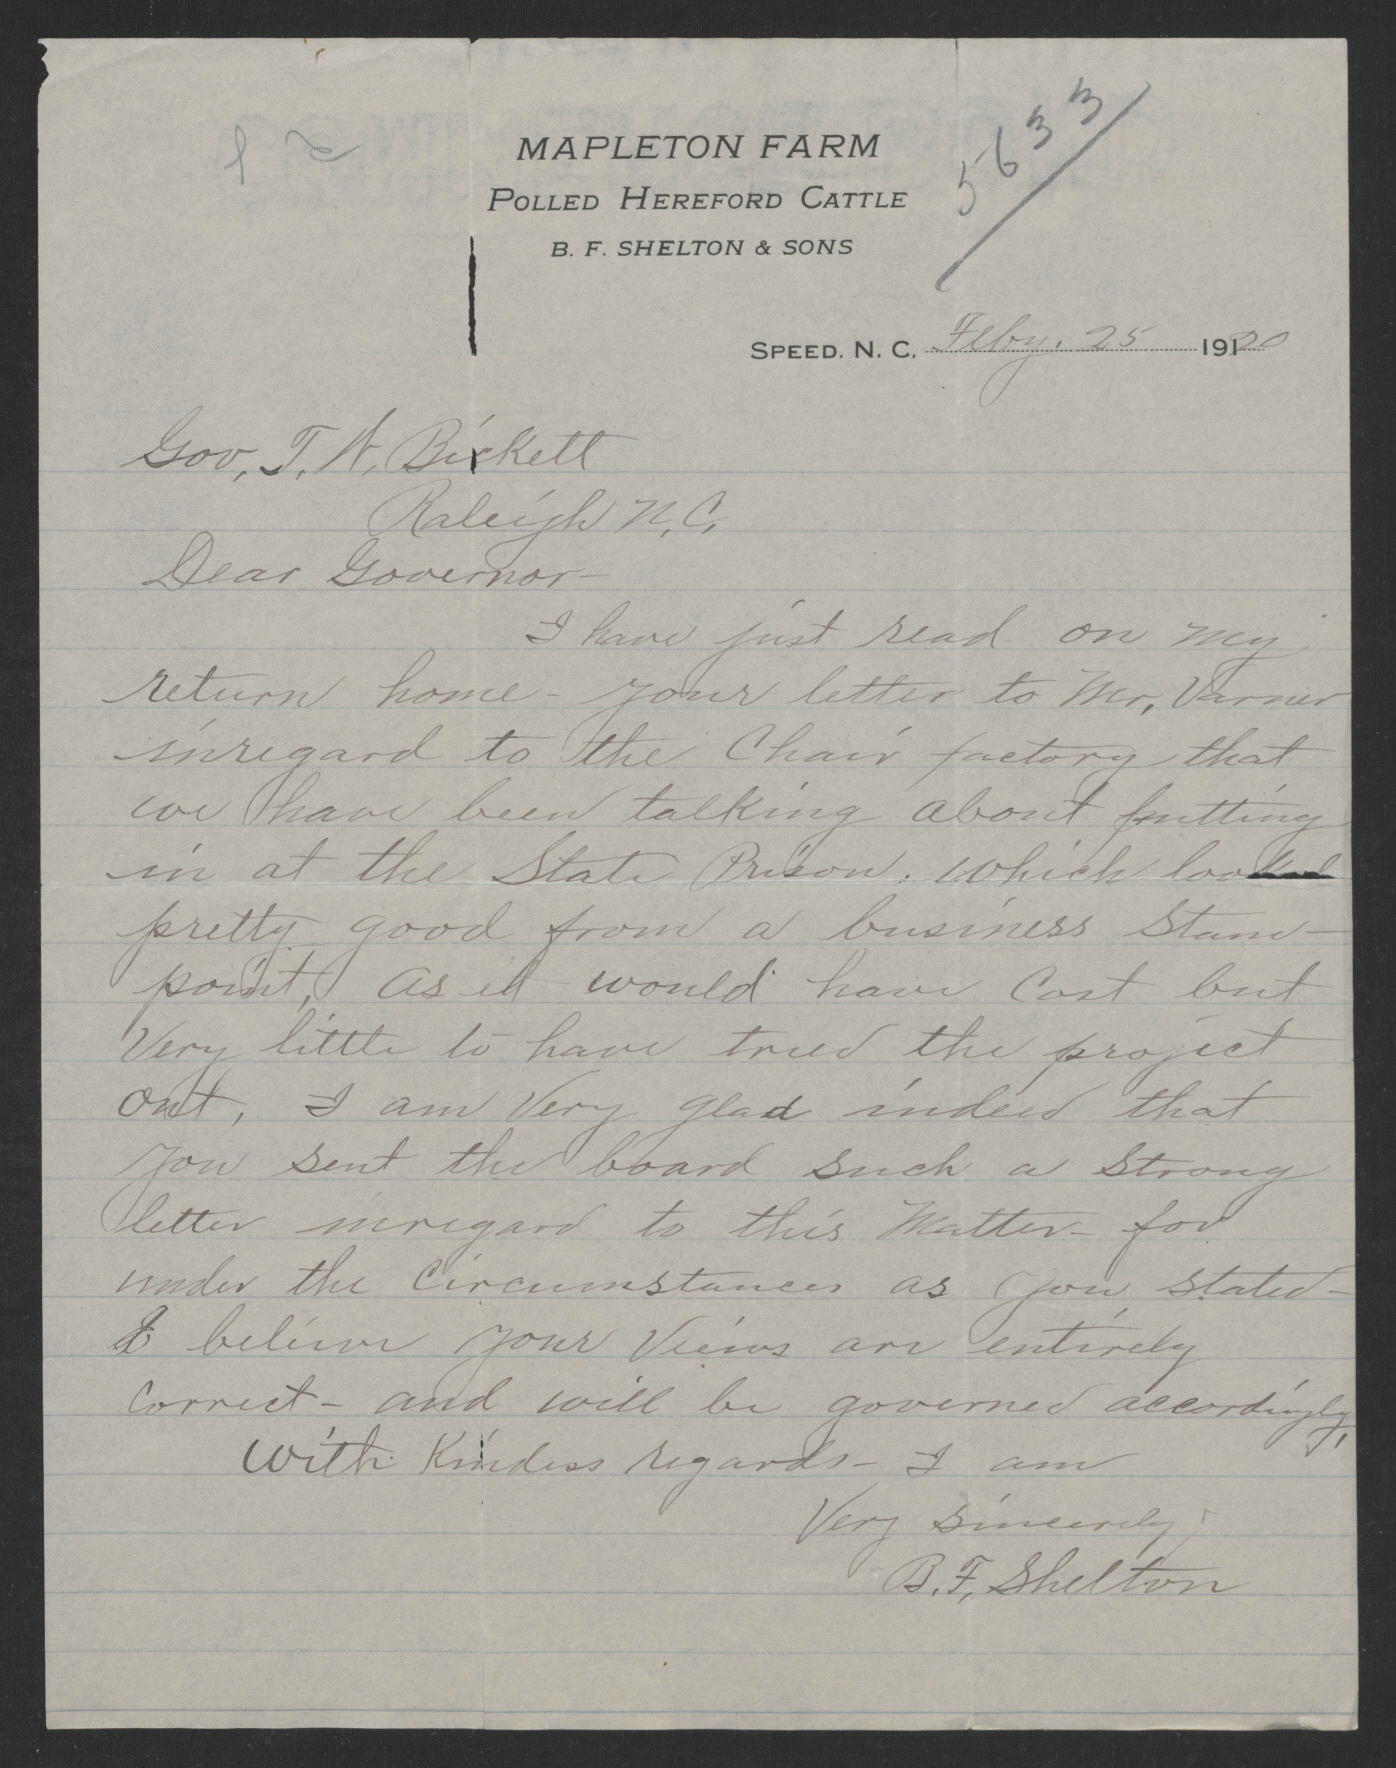 Shelton to Bickett, February 25, 1920